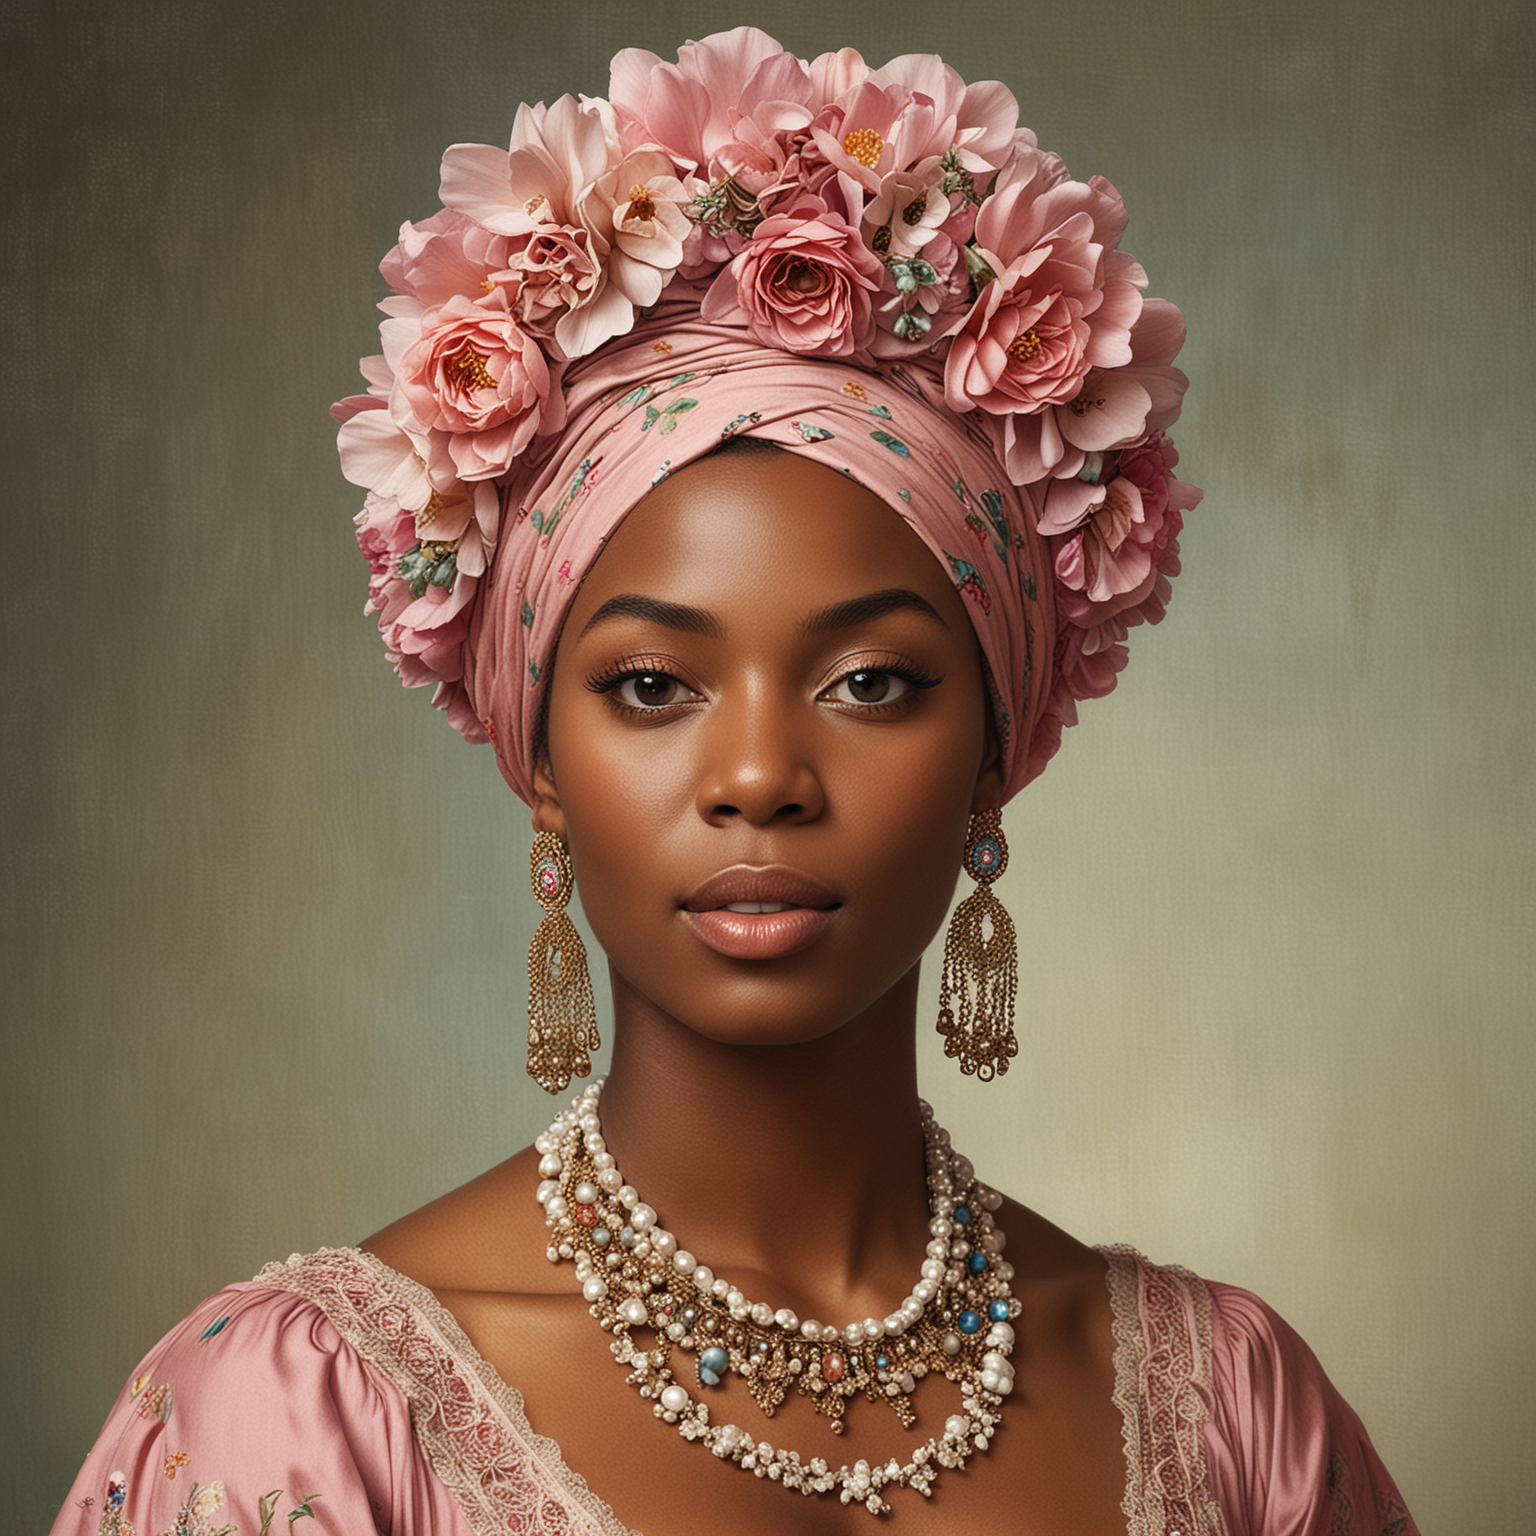 Elegant Black Woman in 18th Century Tignon Era Fashion